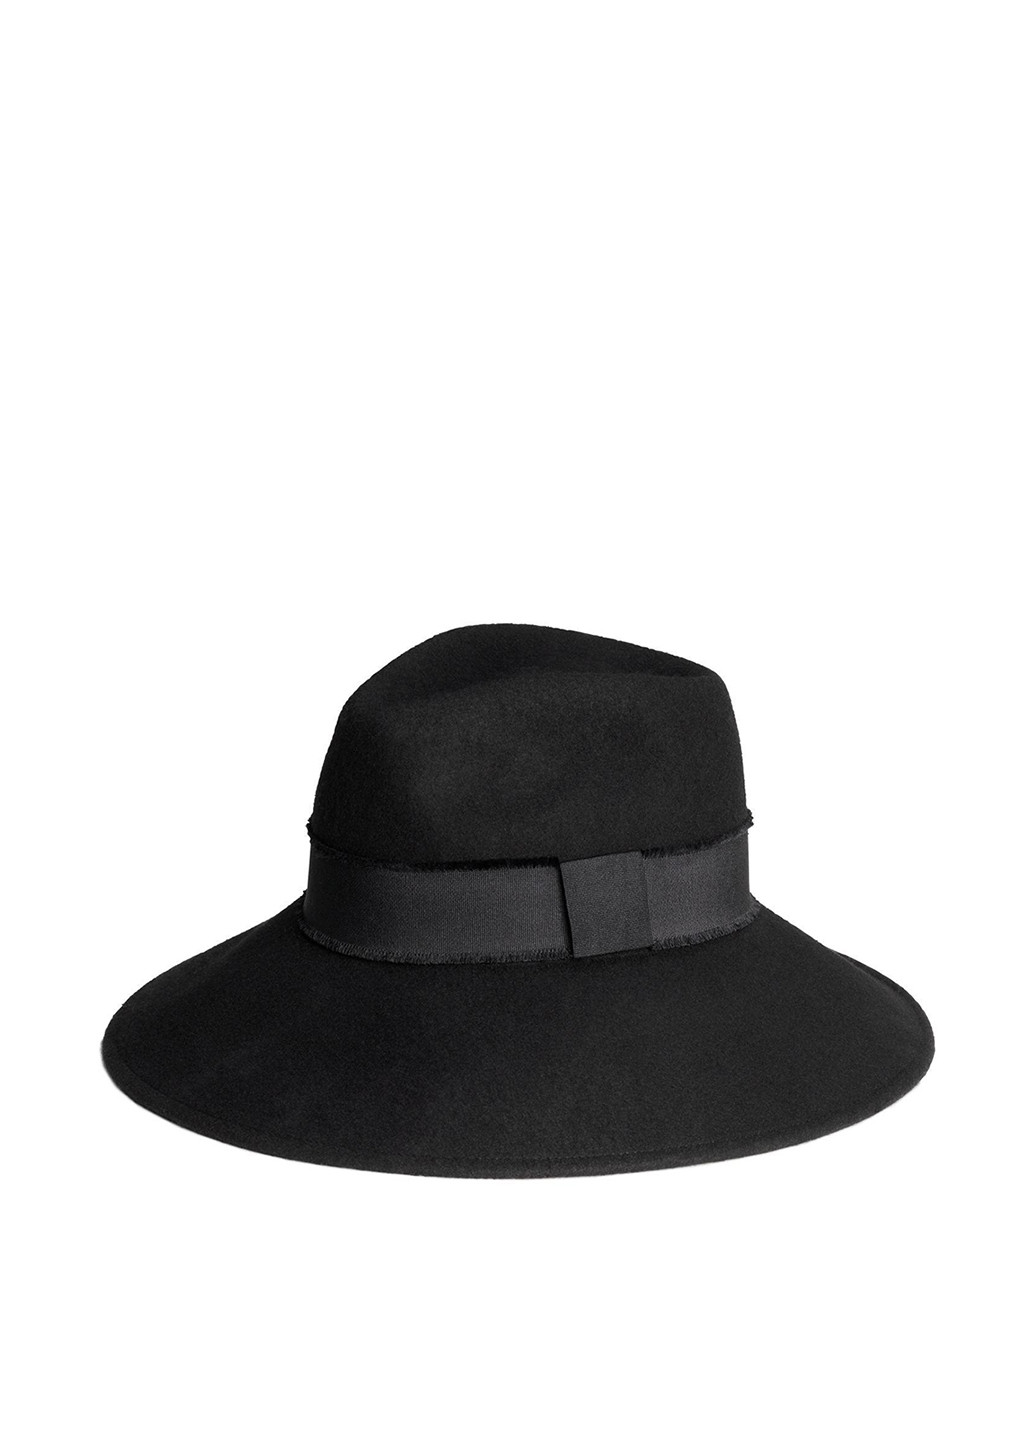 Шляпа H&M слауч однотонная чёрная кэжуал шерсть